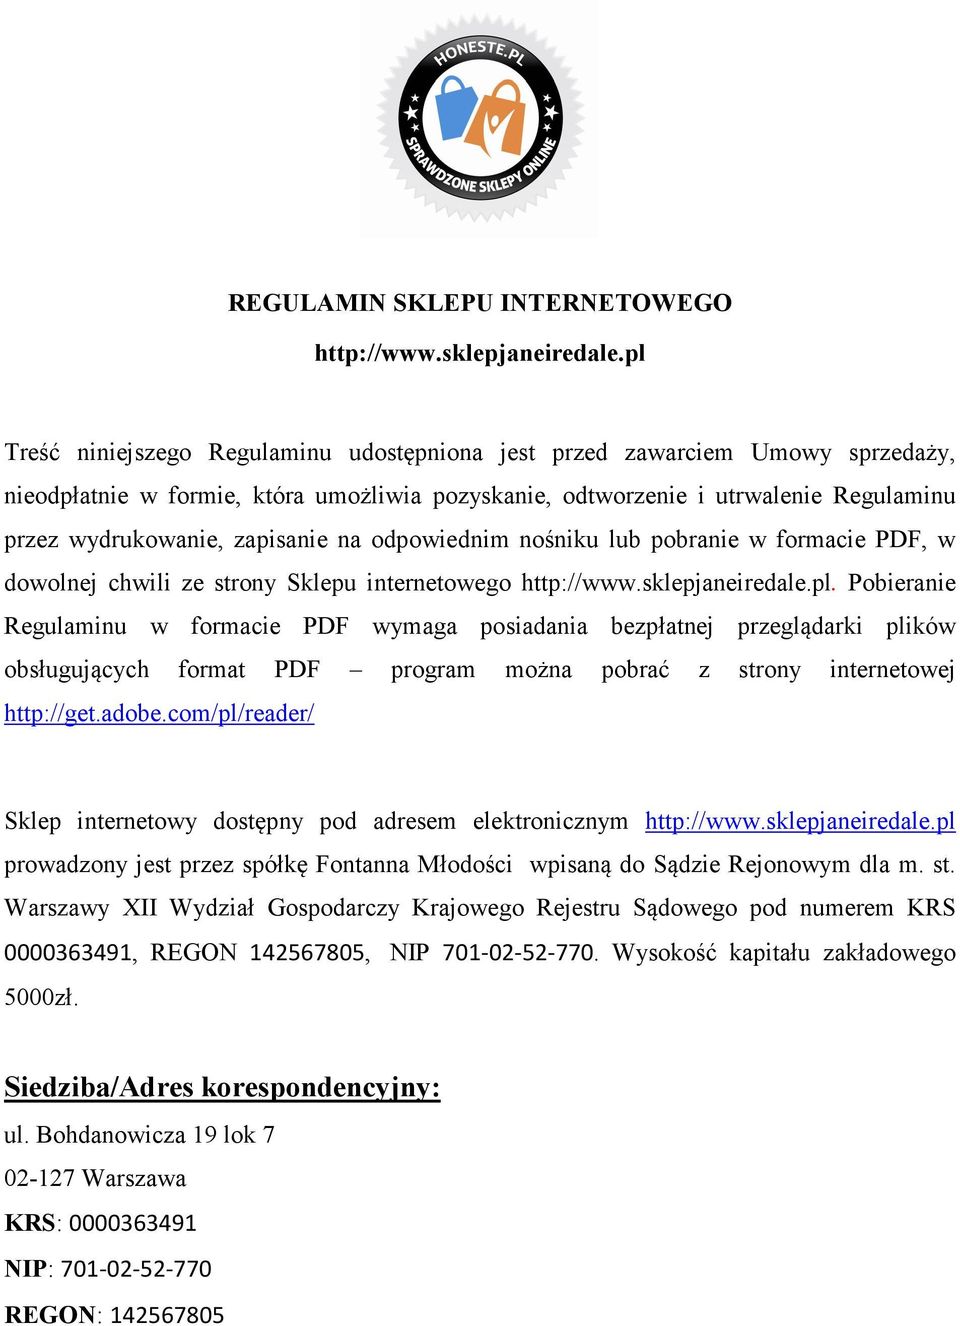 REGULAMIN SKLEPU INTERNETOWEGO - PDF Free Download